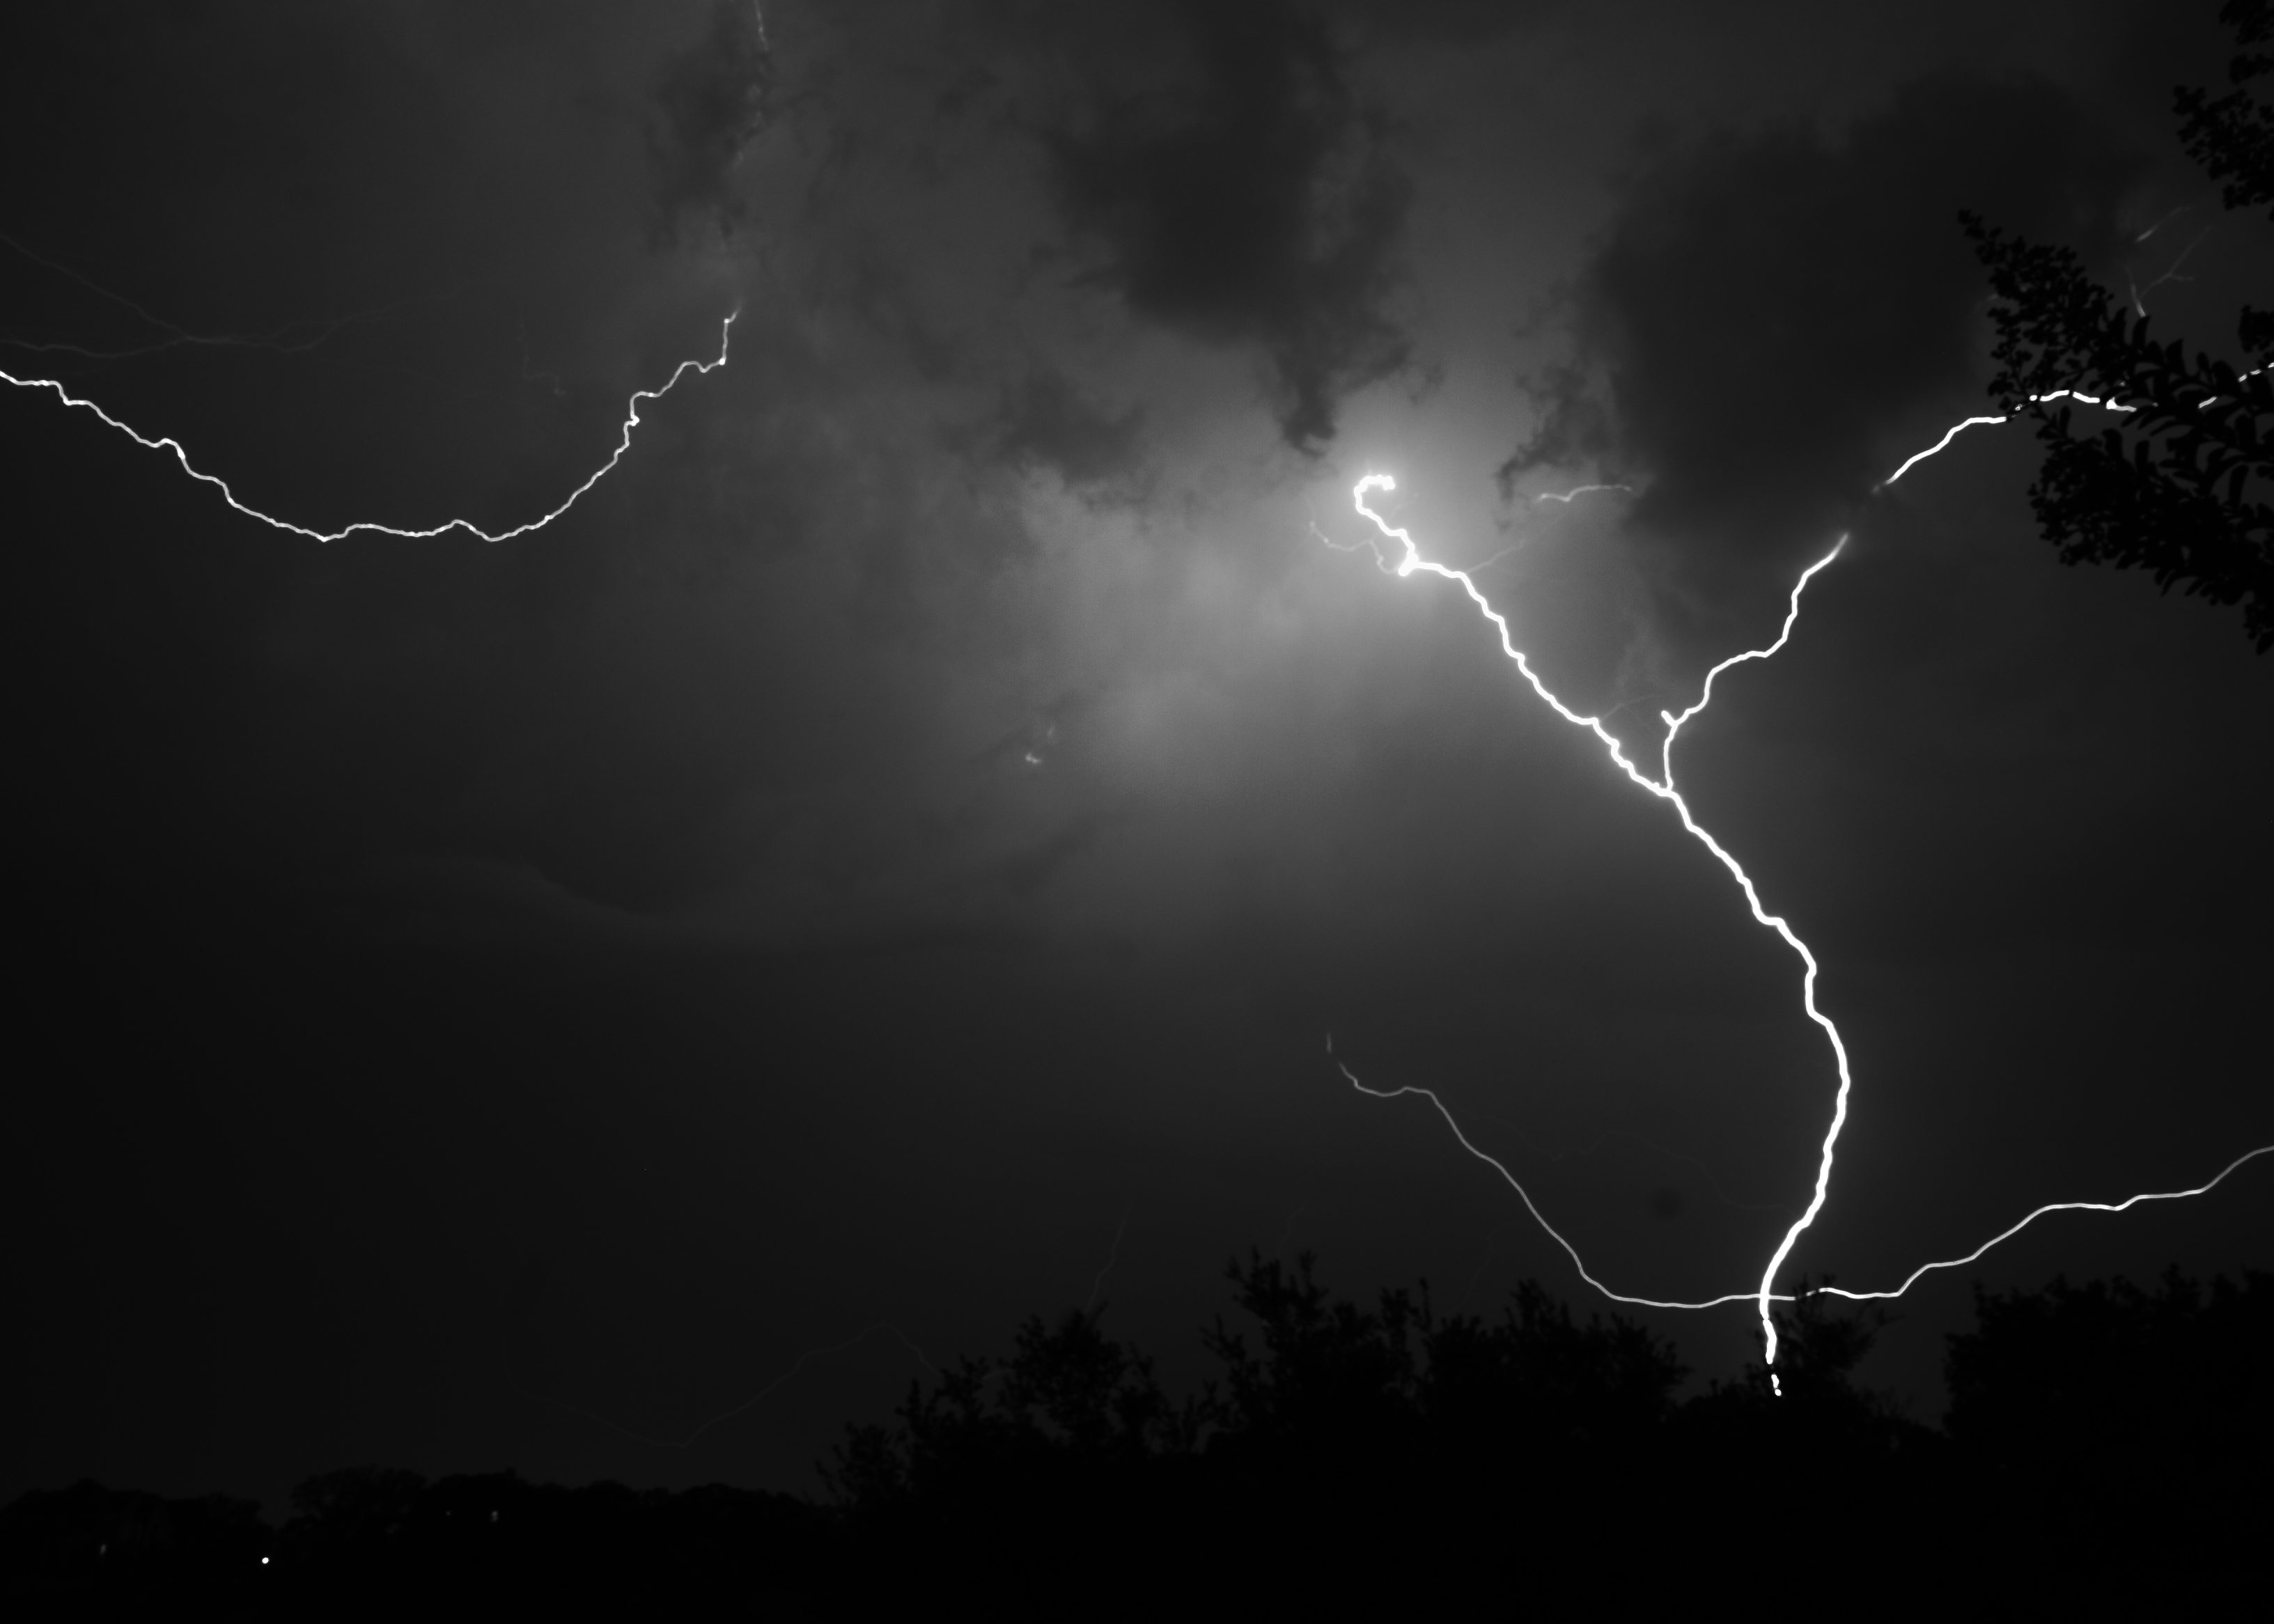 File:Longhorndave - Lightning (by) - Wikimedia Commons